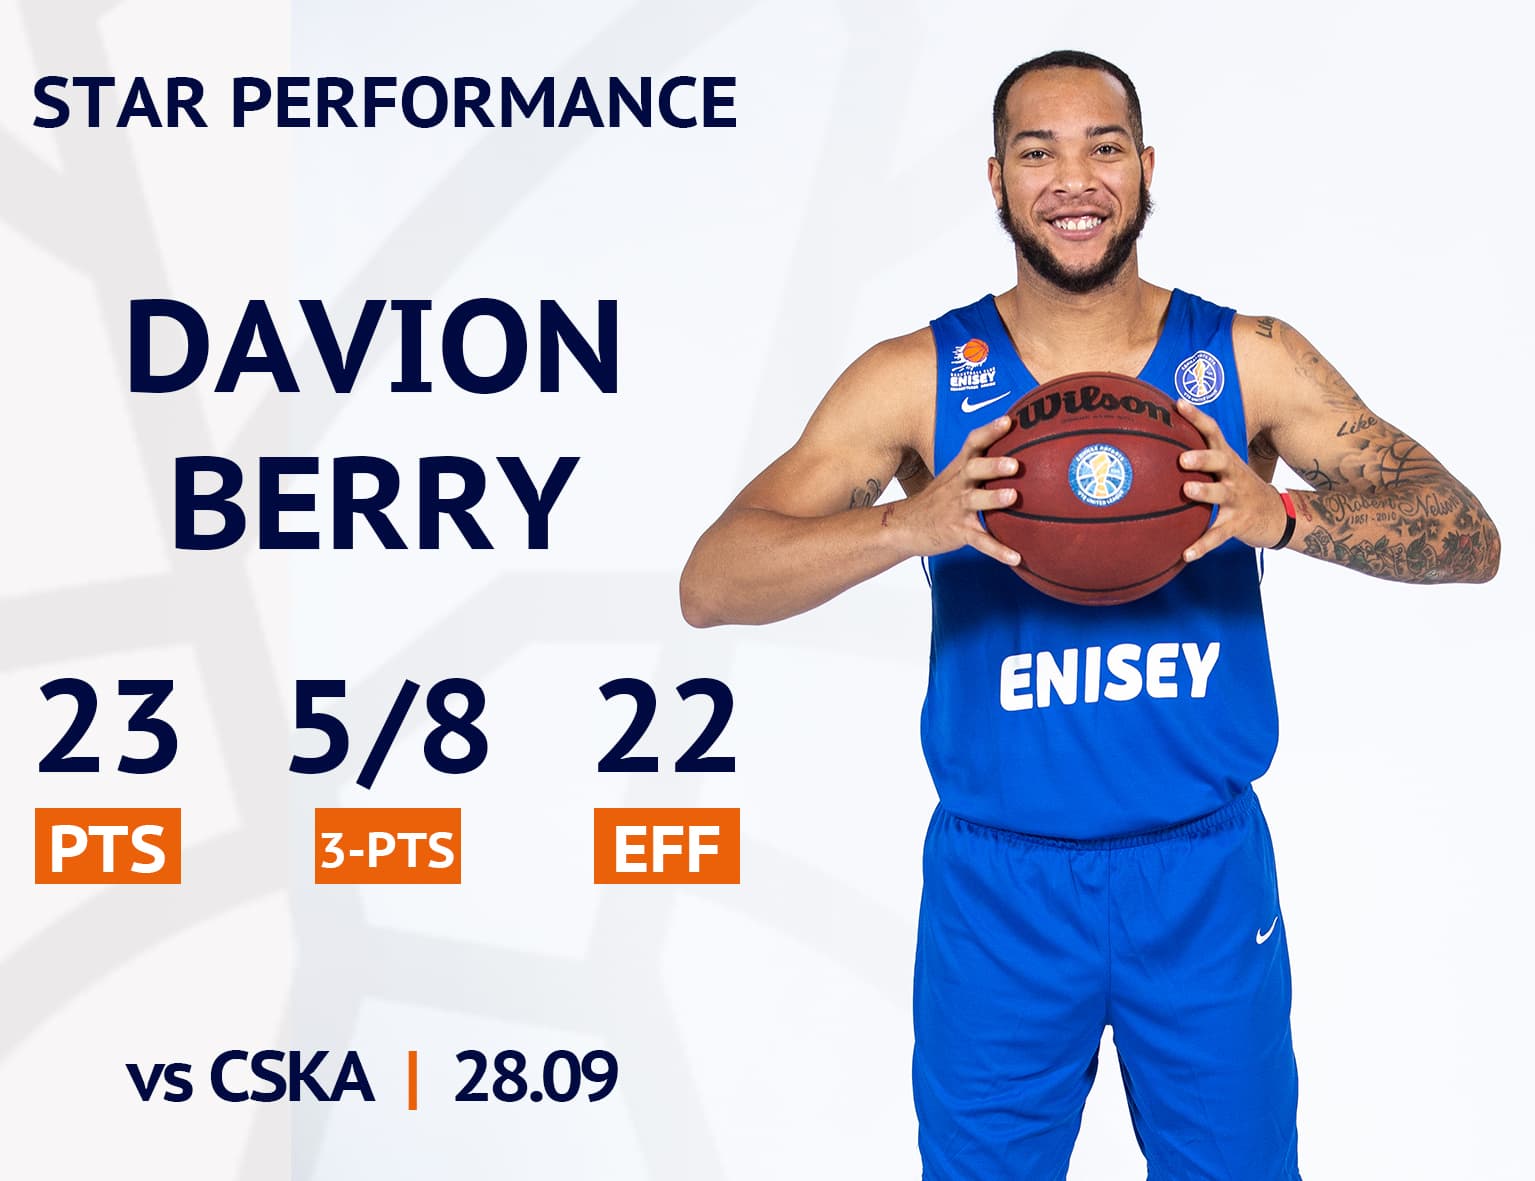 Star performance. Davion Berry vs CSKA